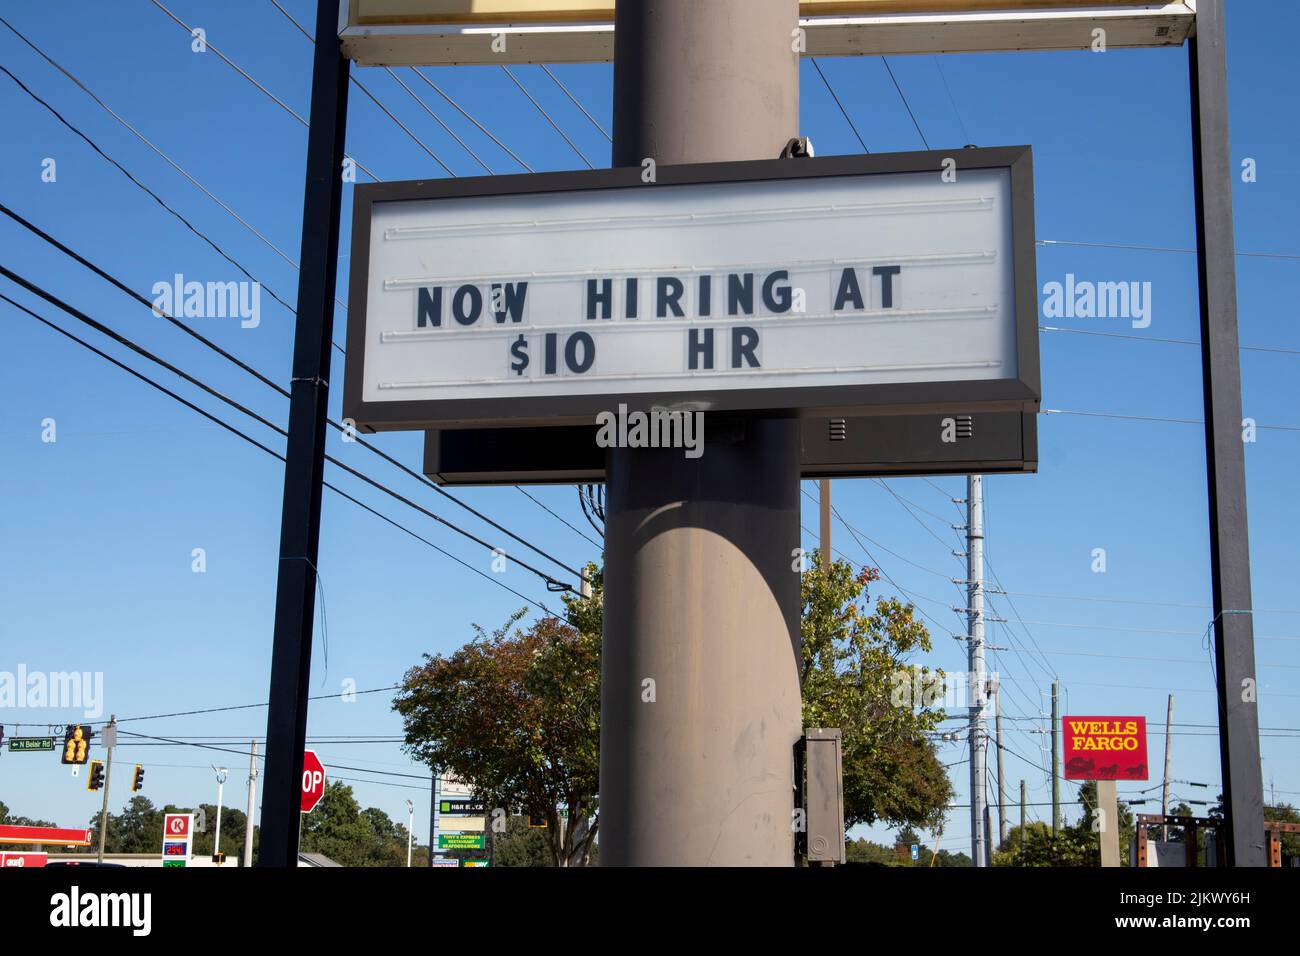 Martinez, Ga USA - 10 18 21: McDonalds Now Hiring street sign Stock Photo